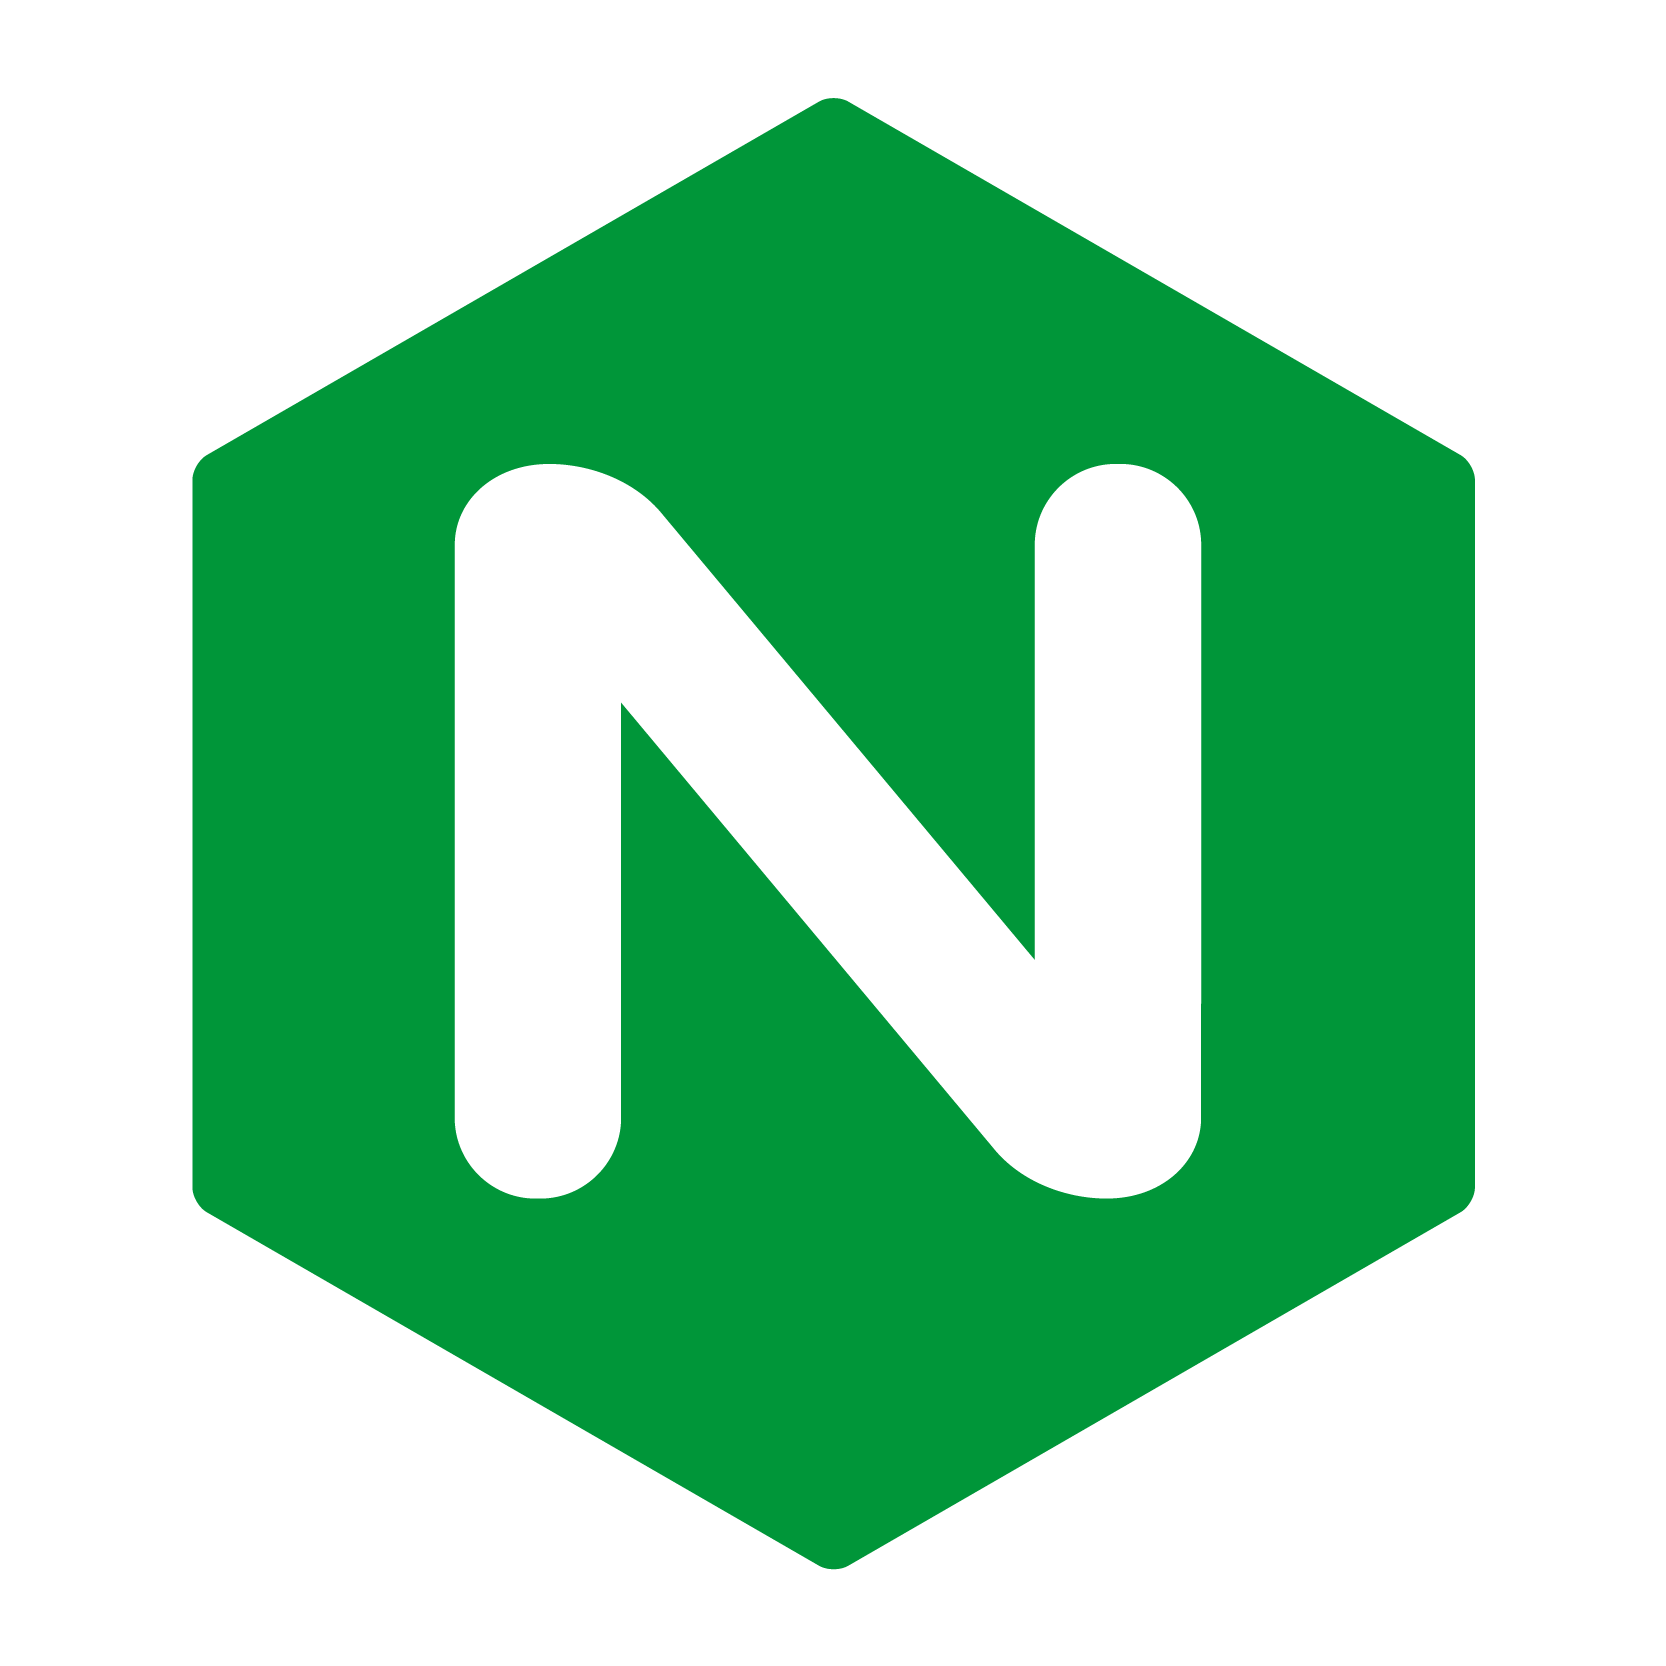 NGINX logo